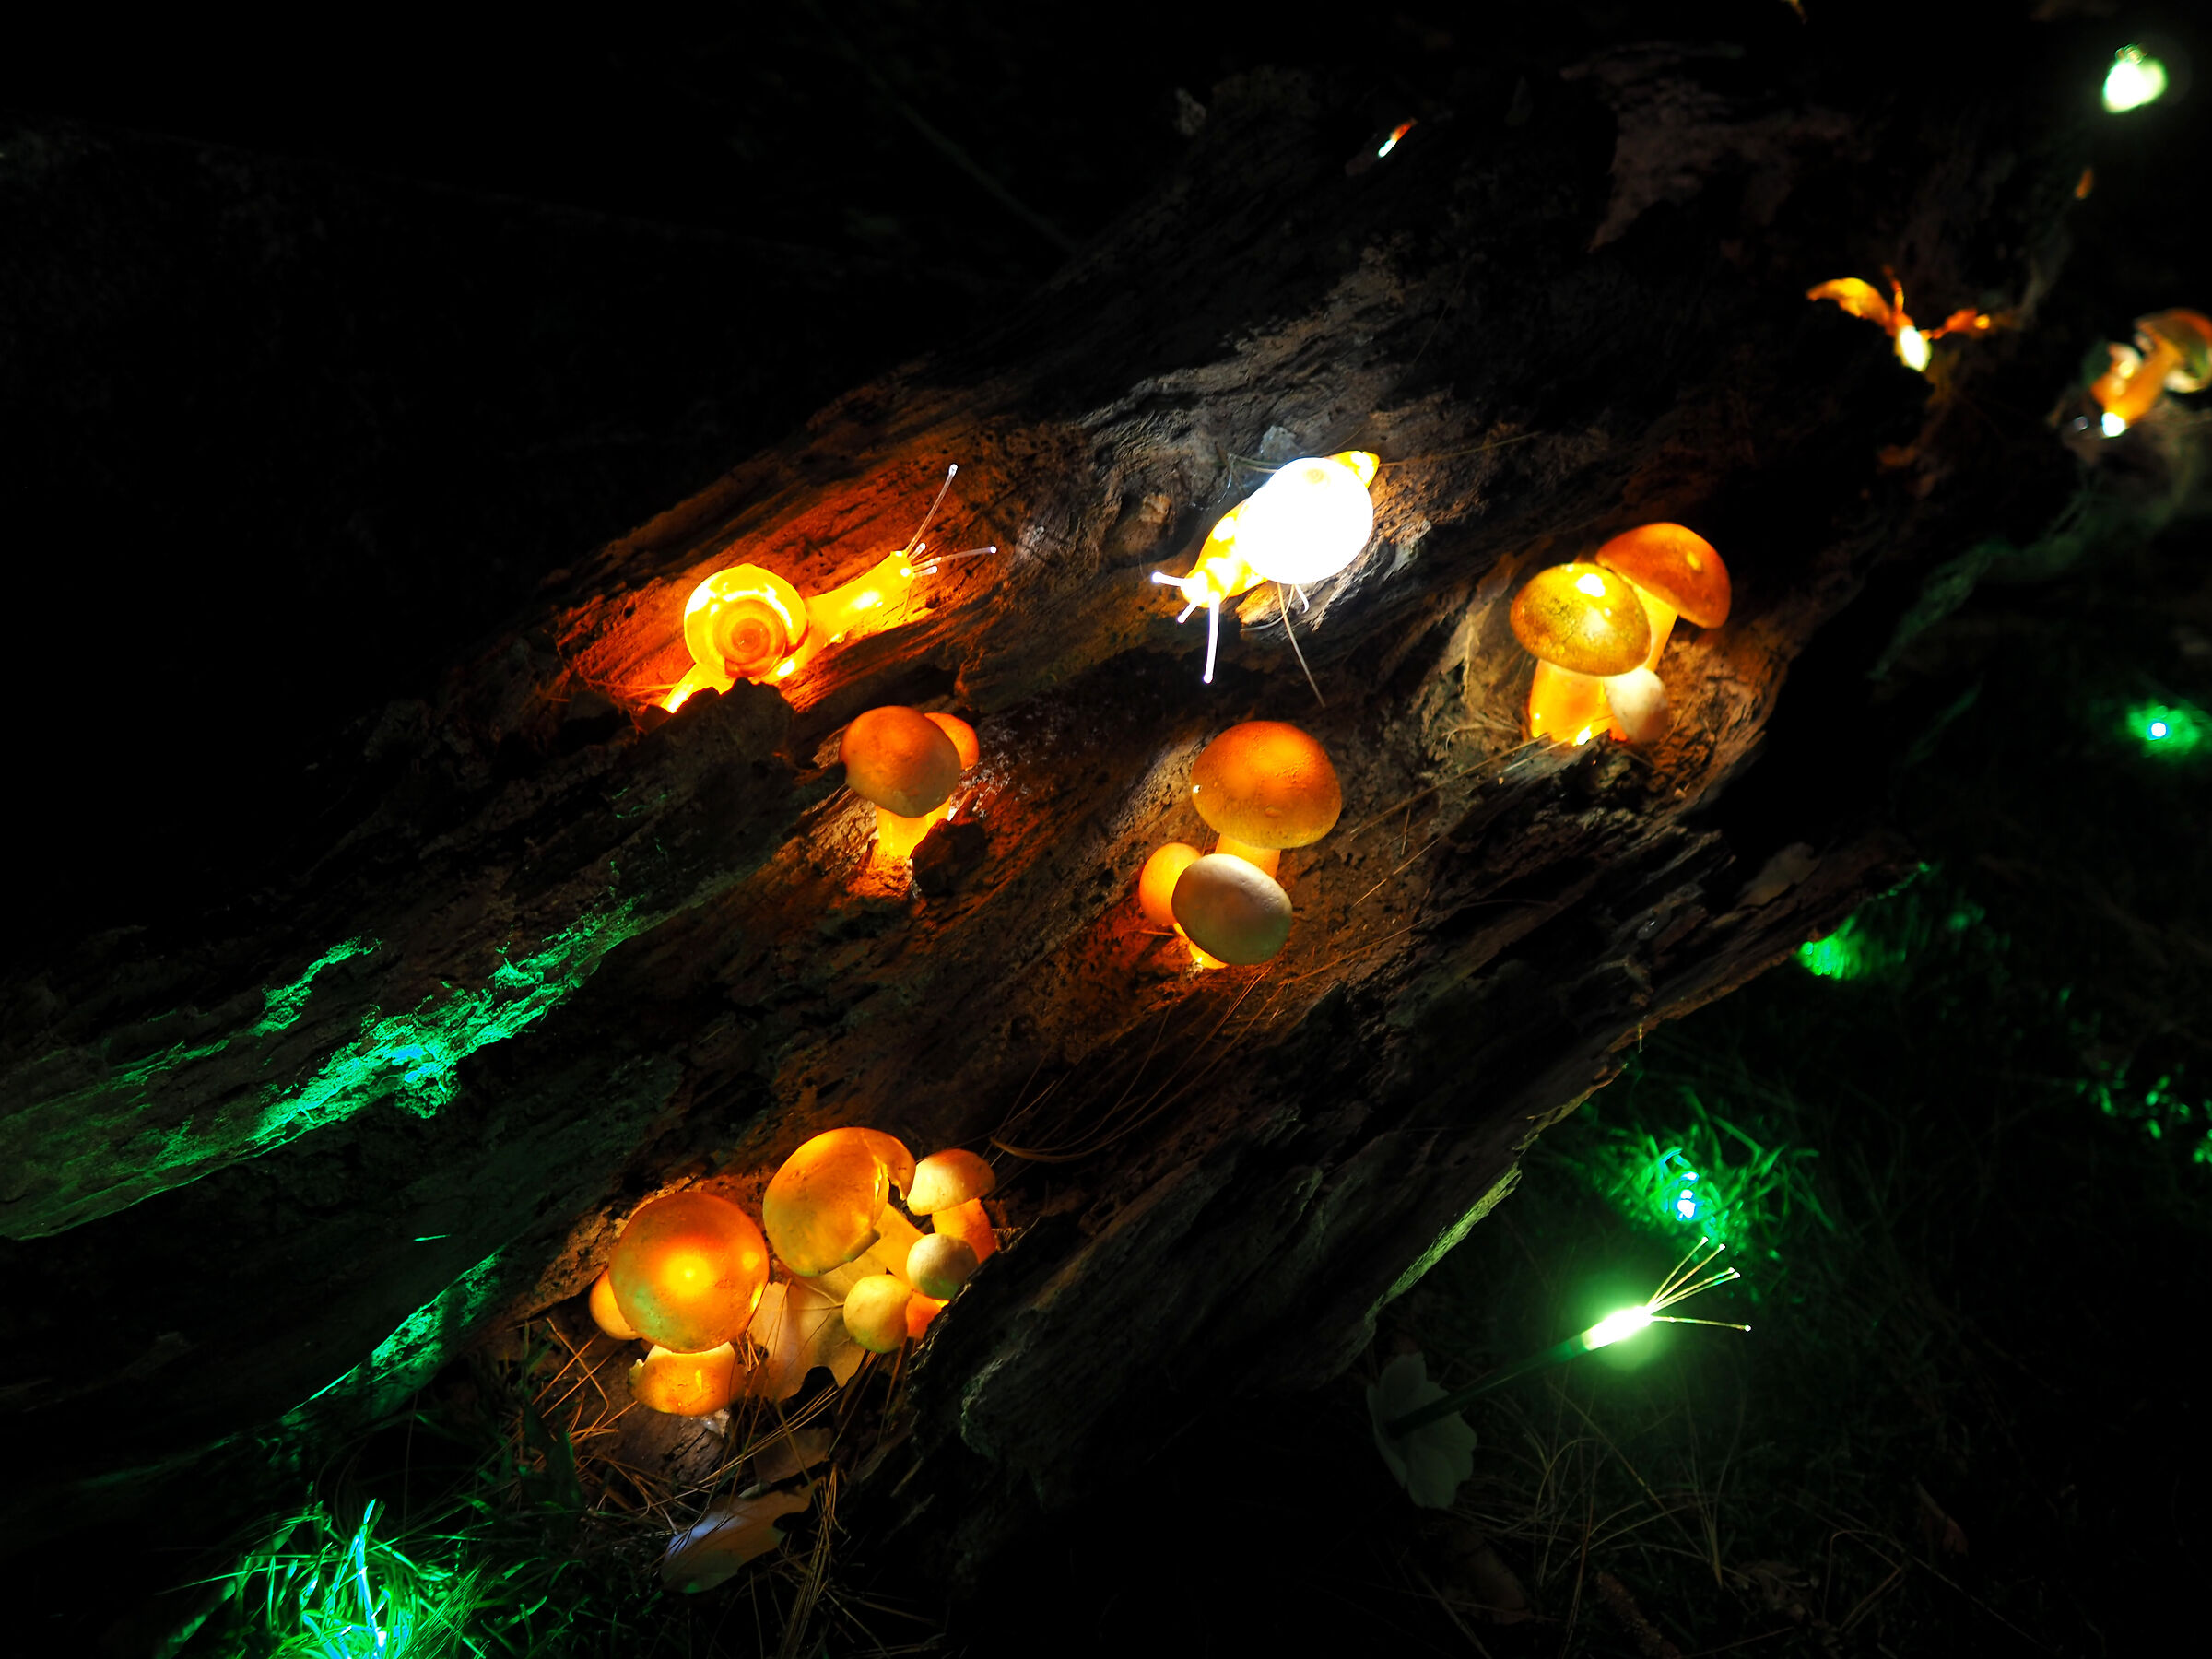 Night mushrooms...